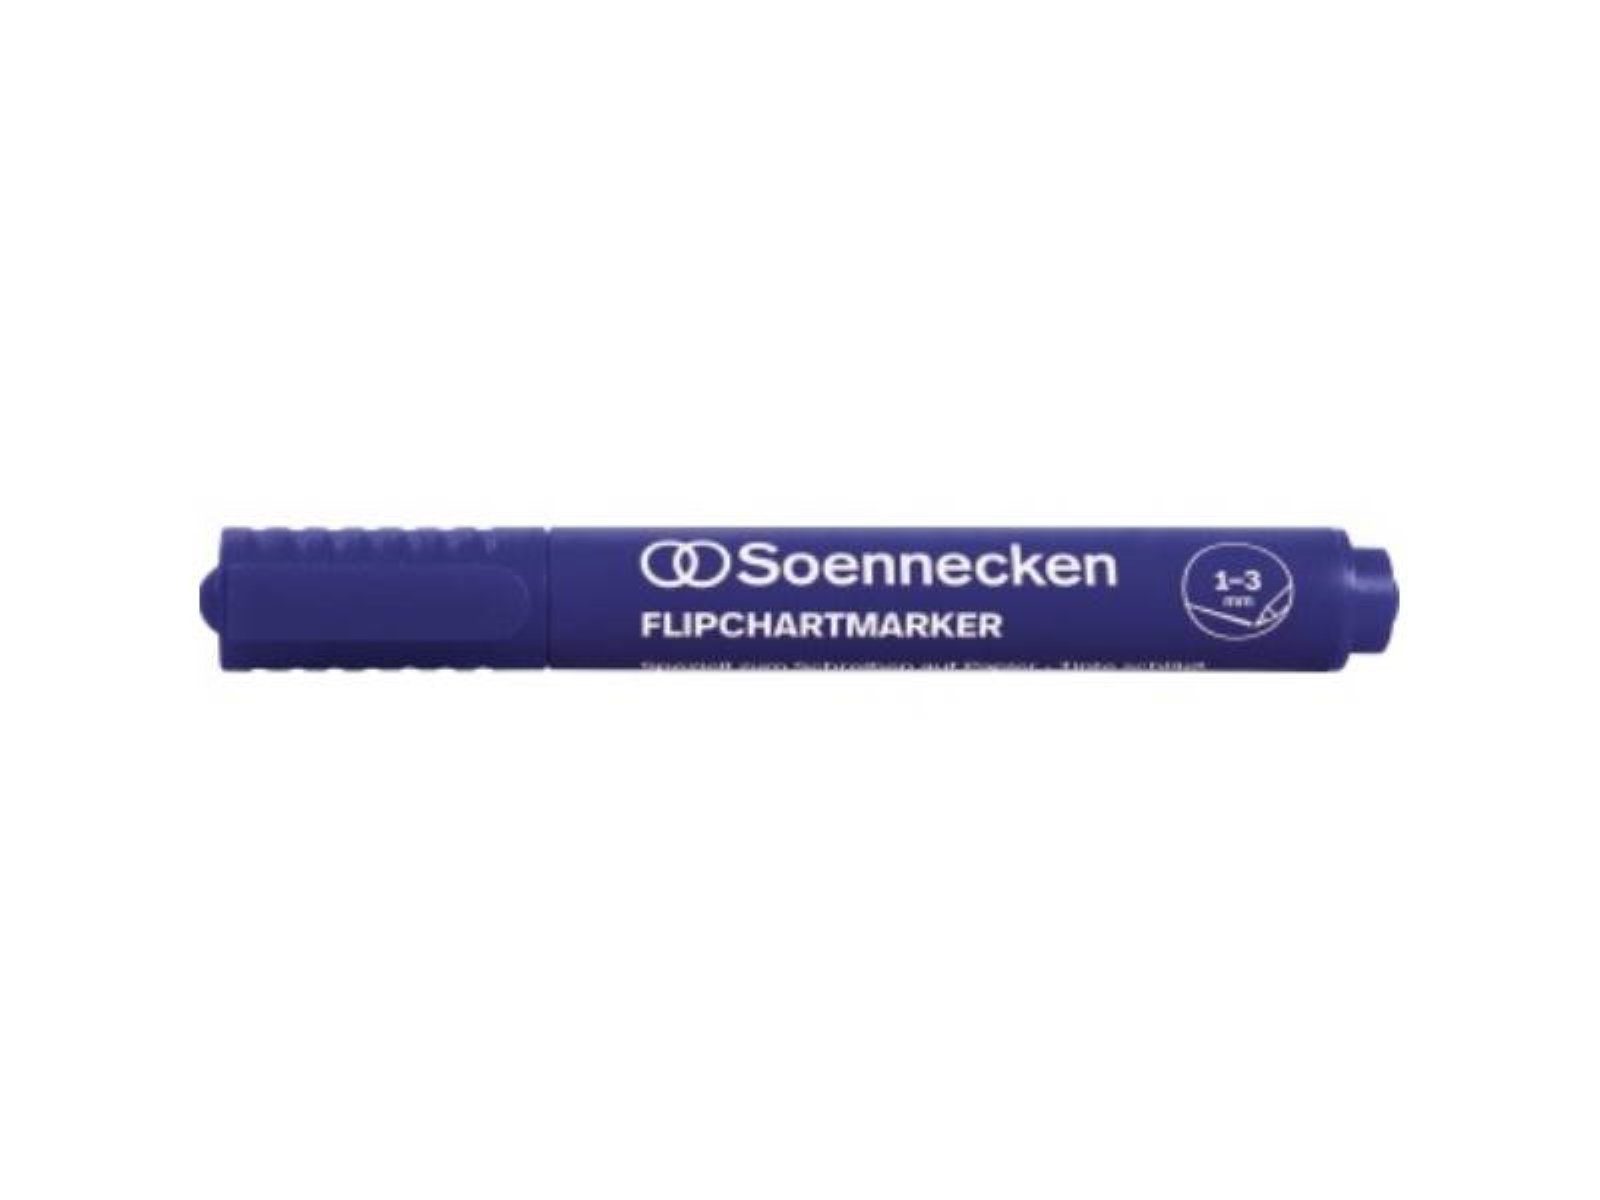 Soennecken Marker SOENNECKEN 3076 Soennecken Flipchartmarker 1-3mm blau Soennecken Fl